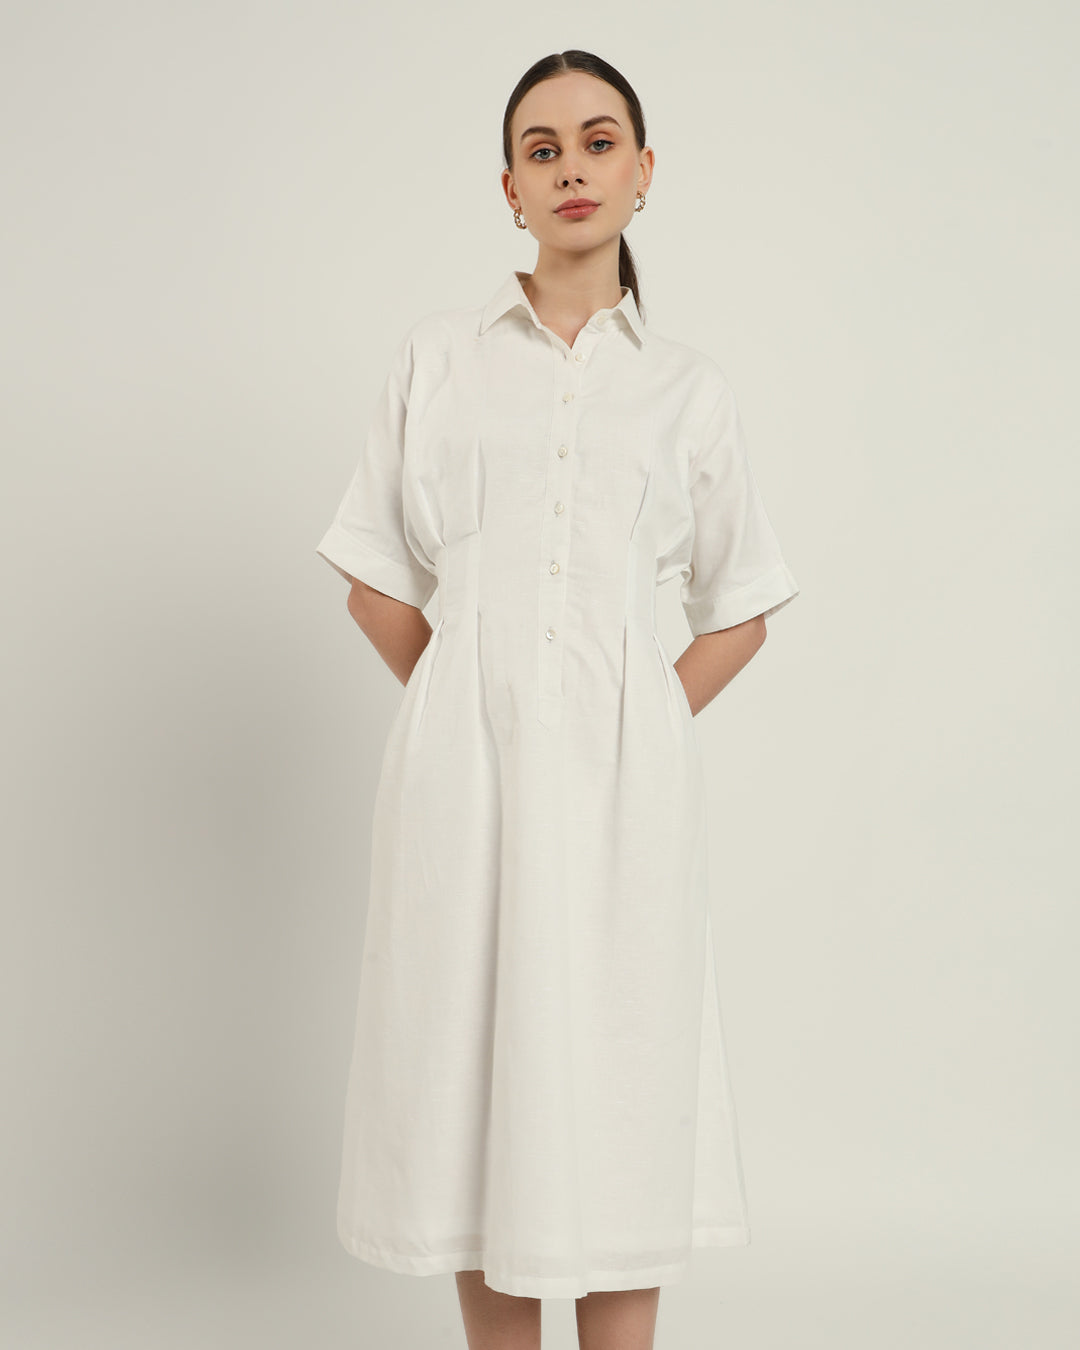 The Salford Daisy White Linen Dress